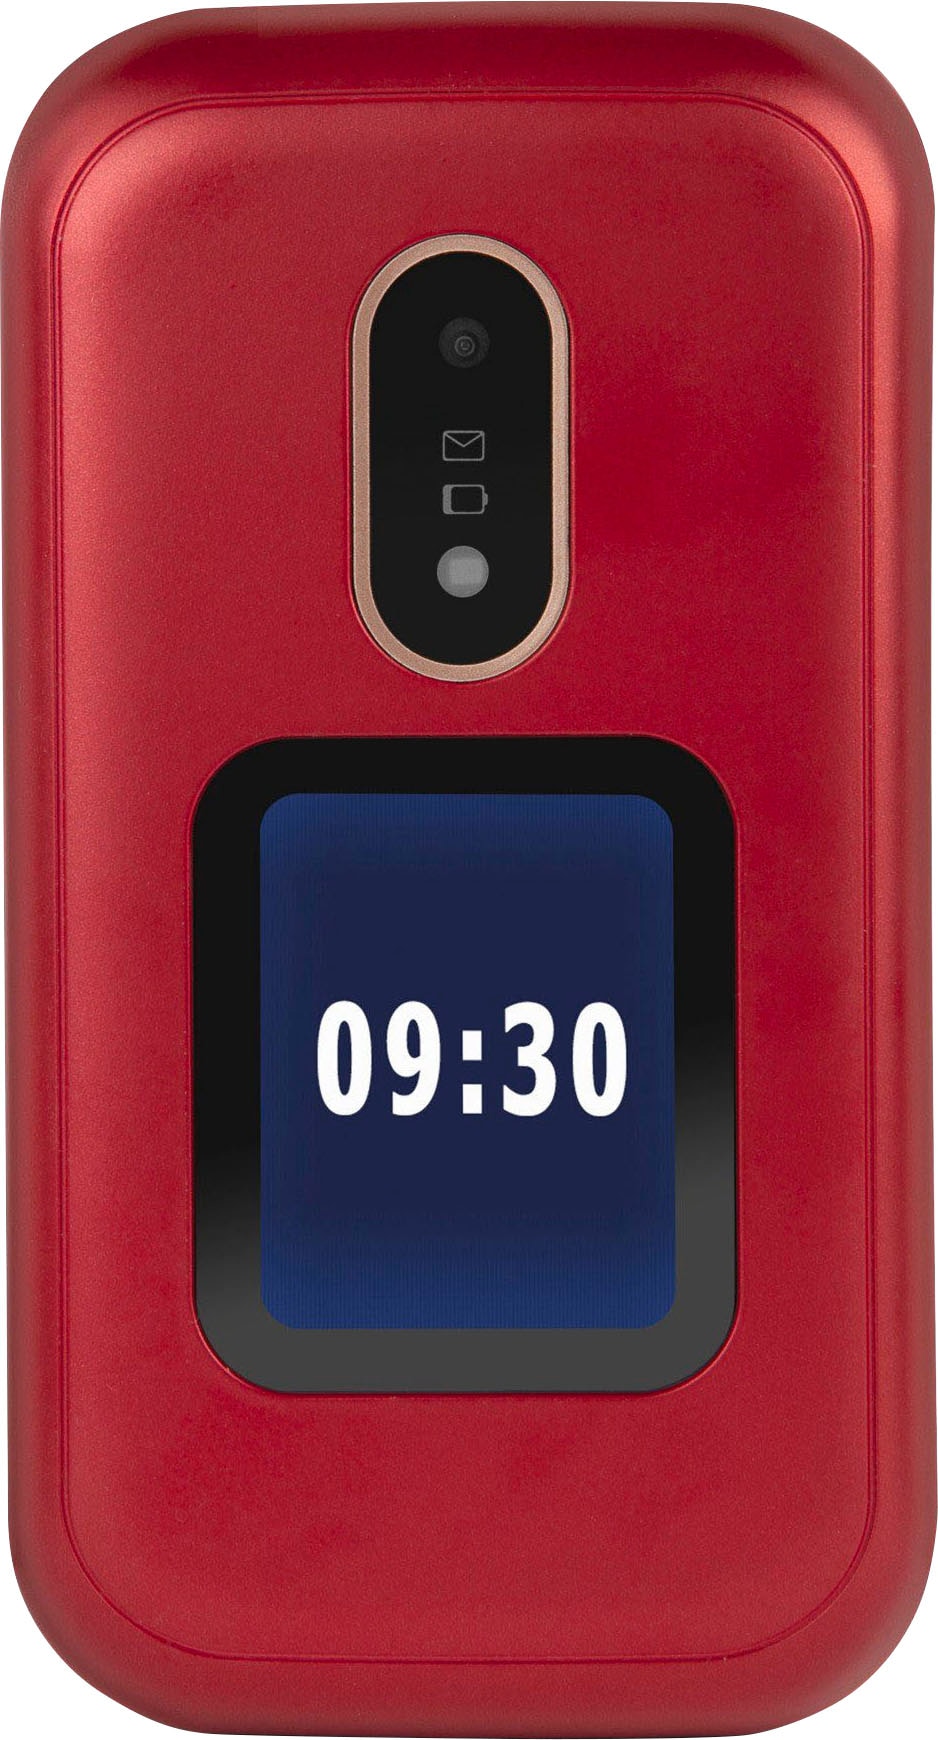 »6060«, rot, OTTO jetzt cm/2,8 bei MP Kamera 3 Doro Handy 7,11 kaufen Zoll,